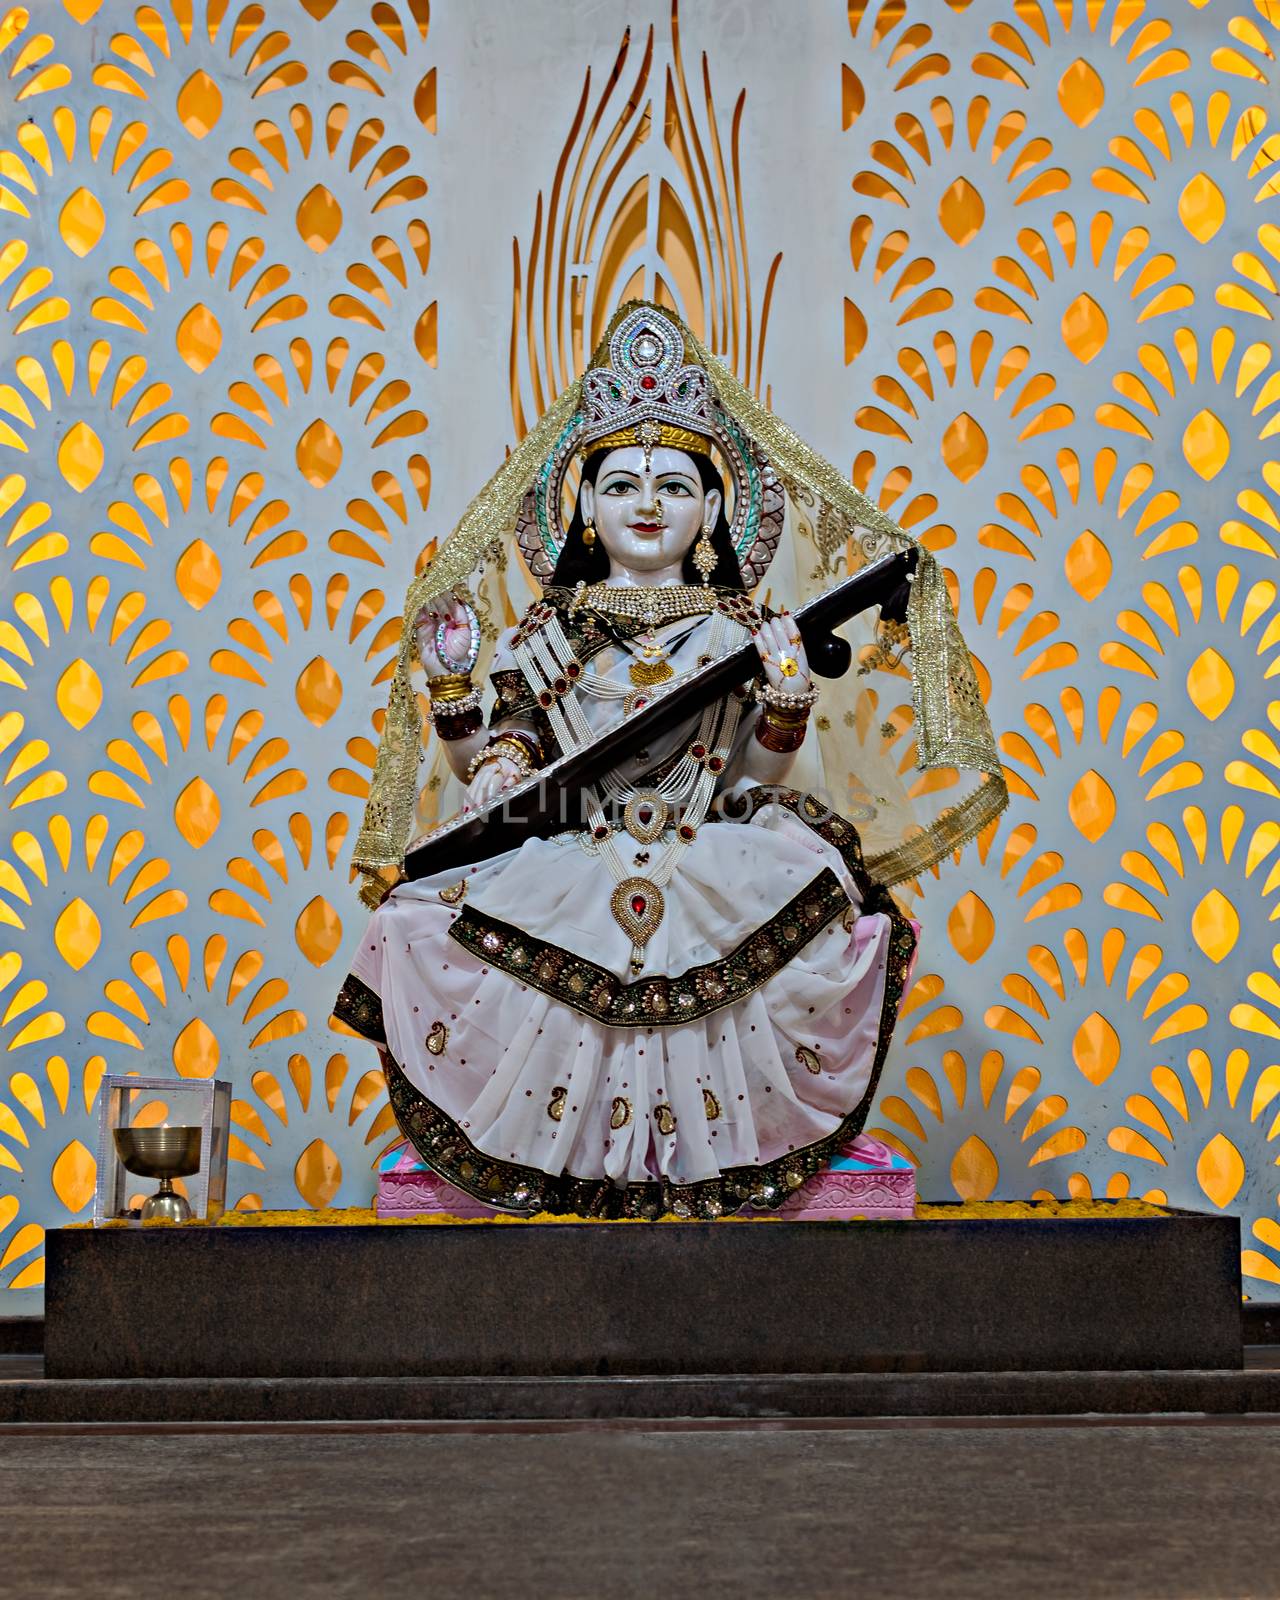 Nicely decorated Idol of Hindu Goddess Saraswati in a temple at Yavatmal, Maharashtra, India.